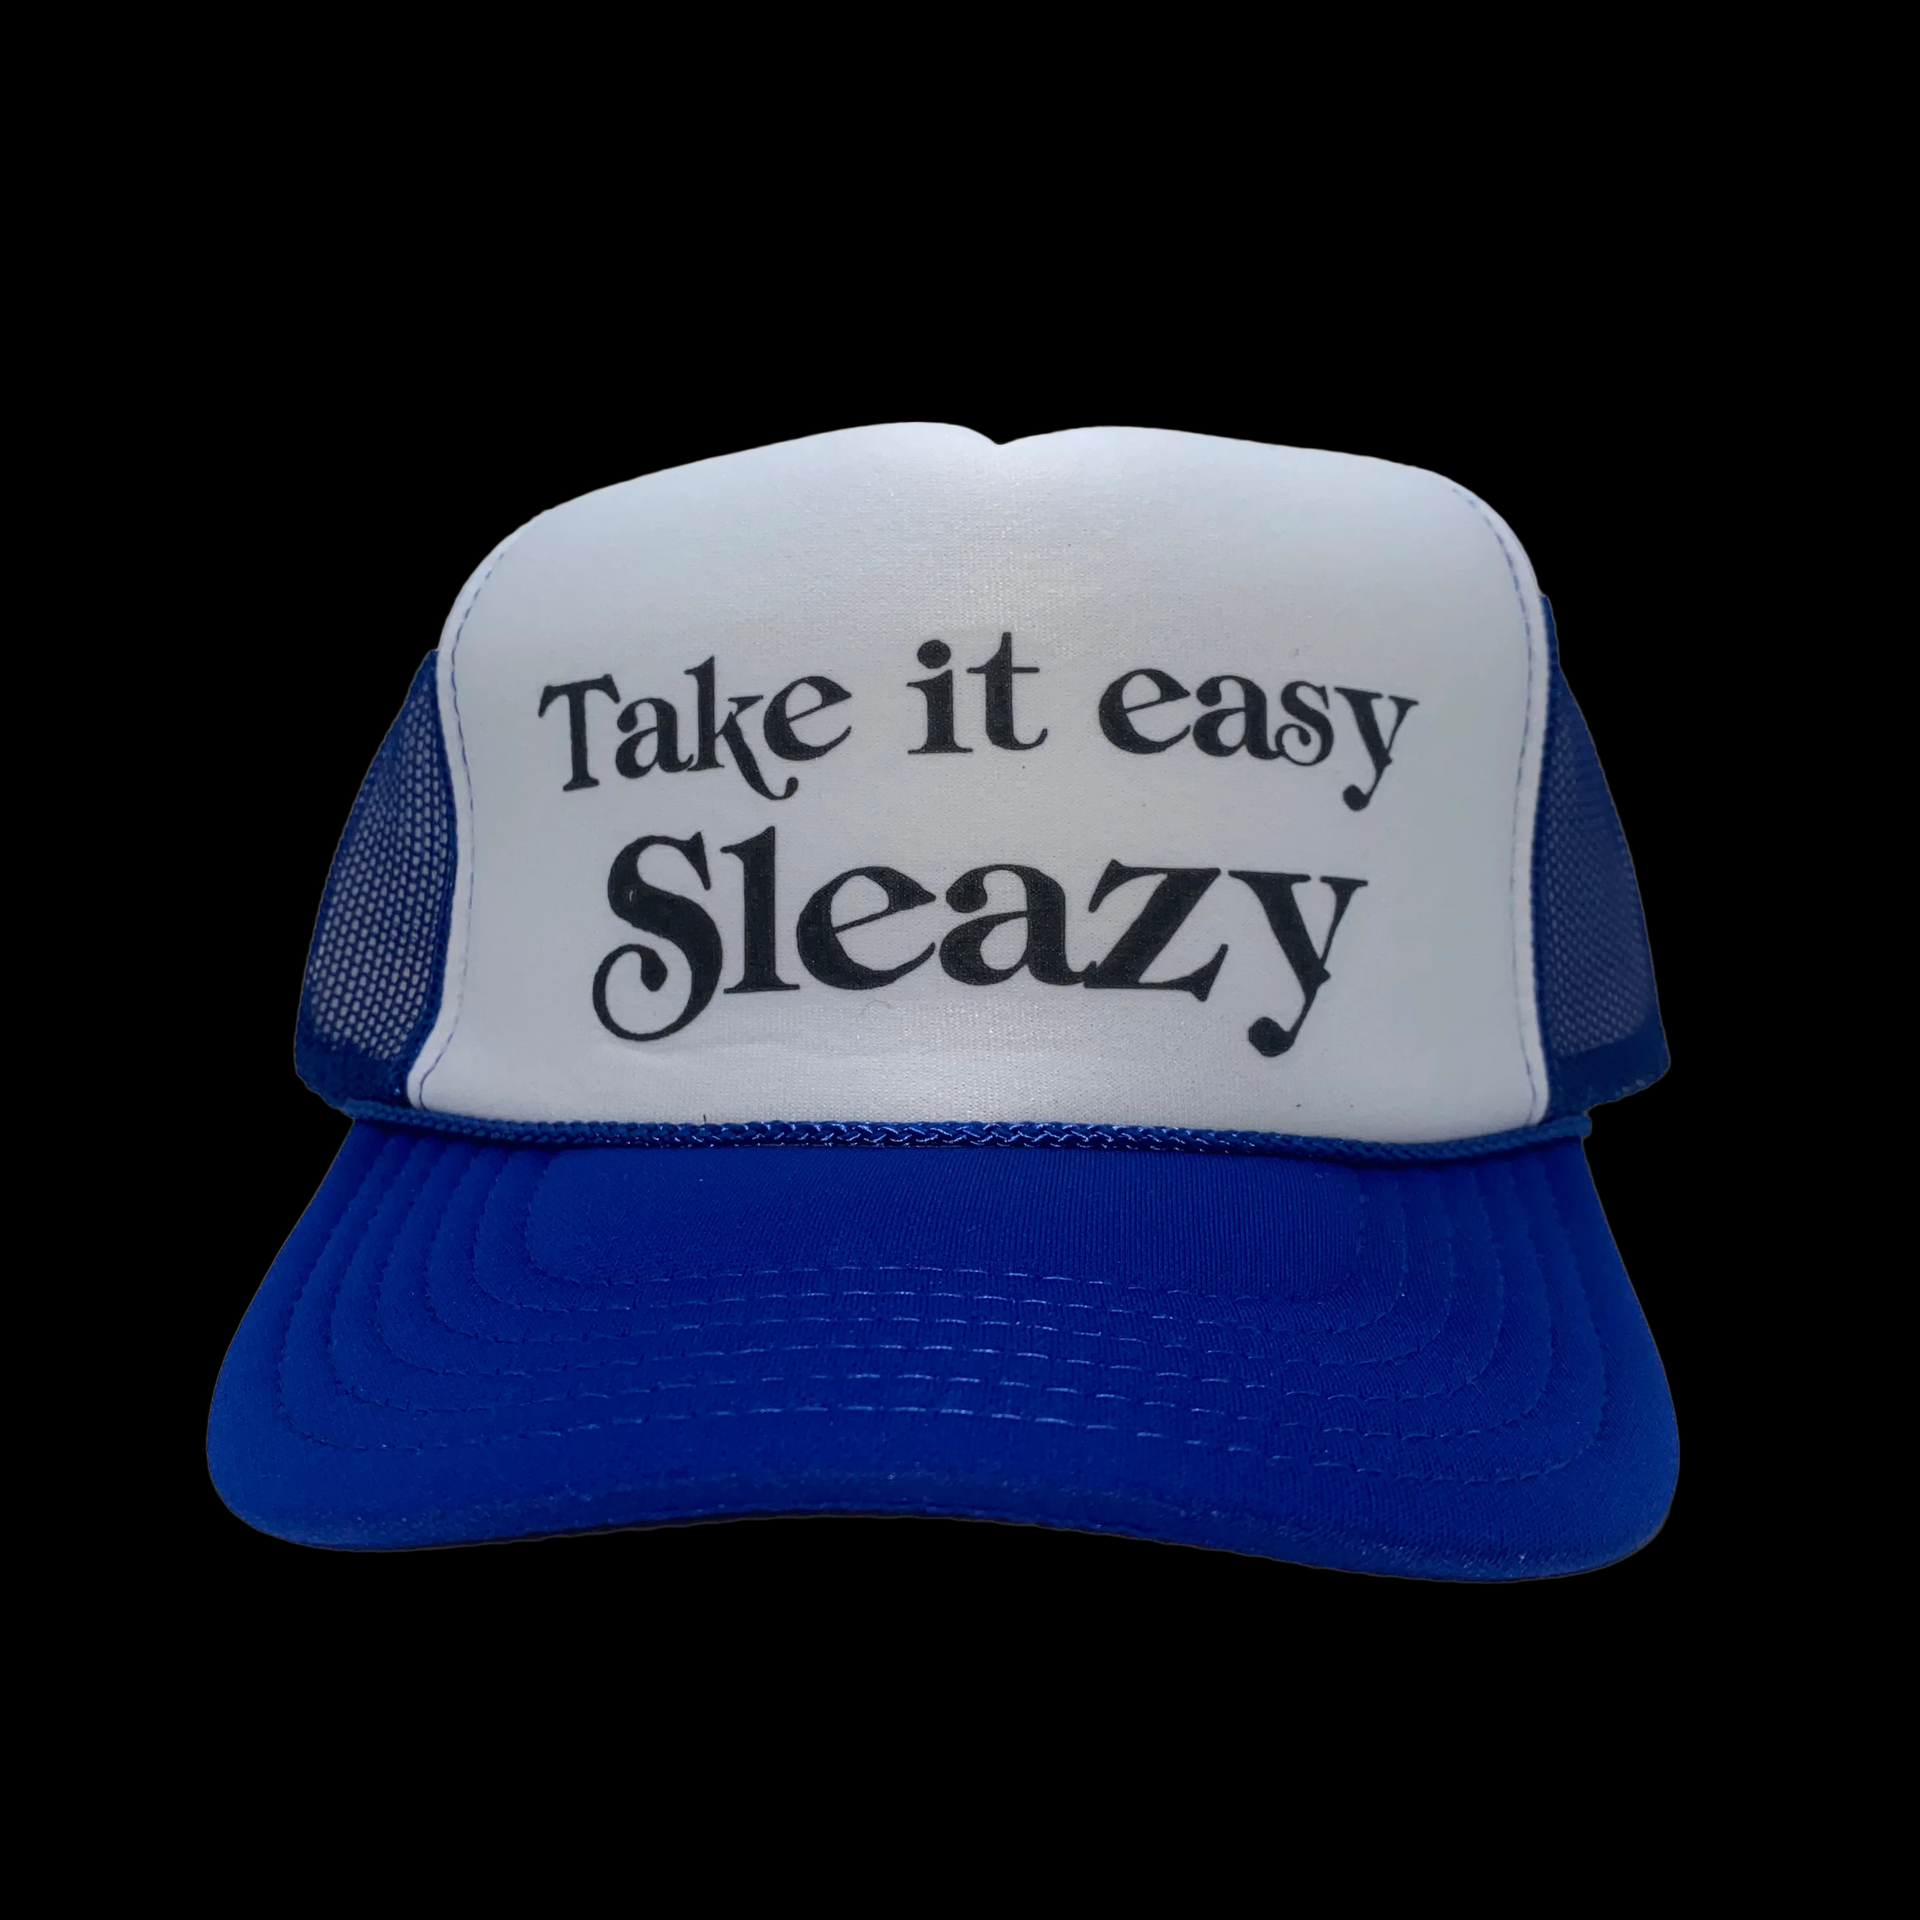 Take it easy sleazy